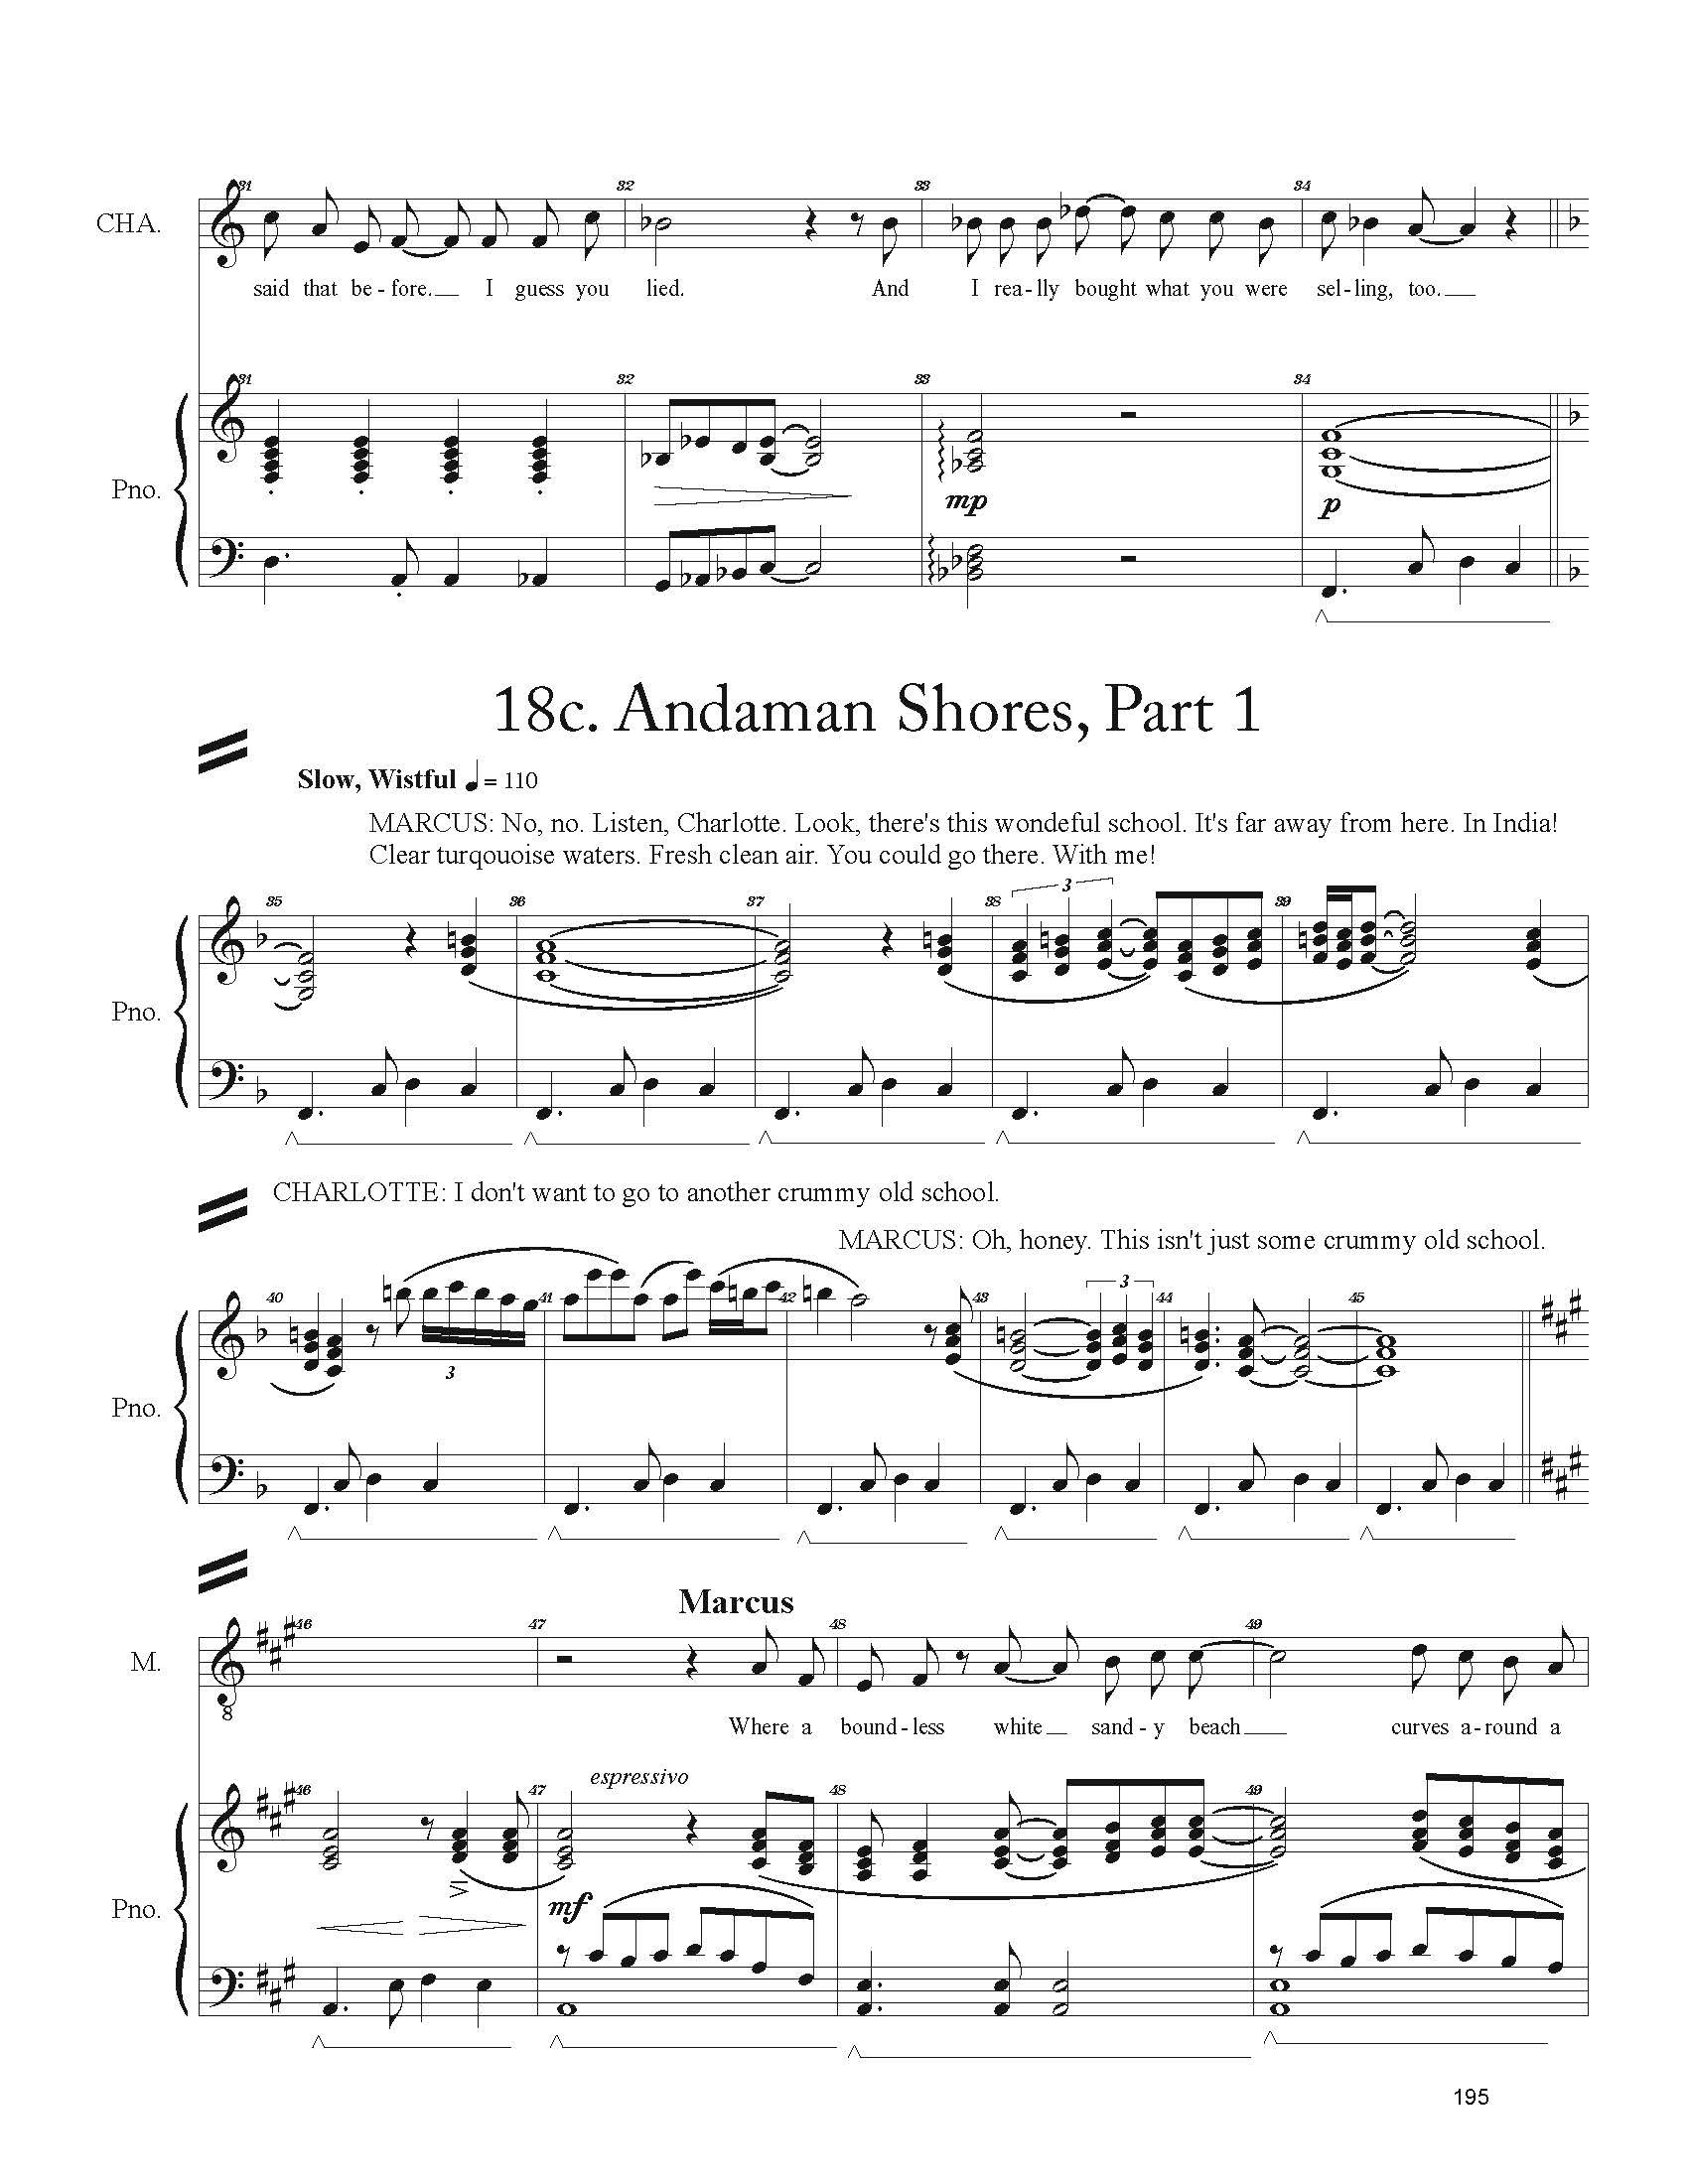 FULL PIANO VOCAL SCORE DRAFT 1 - Score_Page_195.jpg